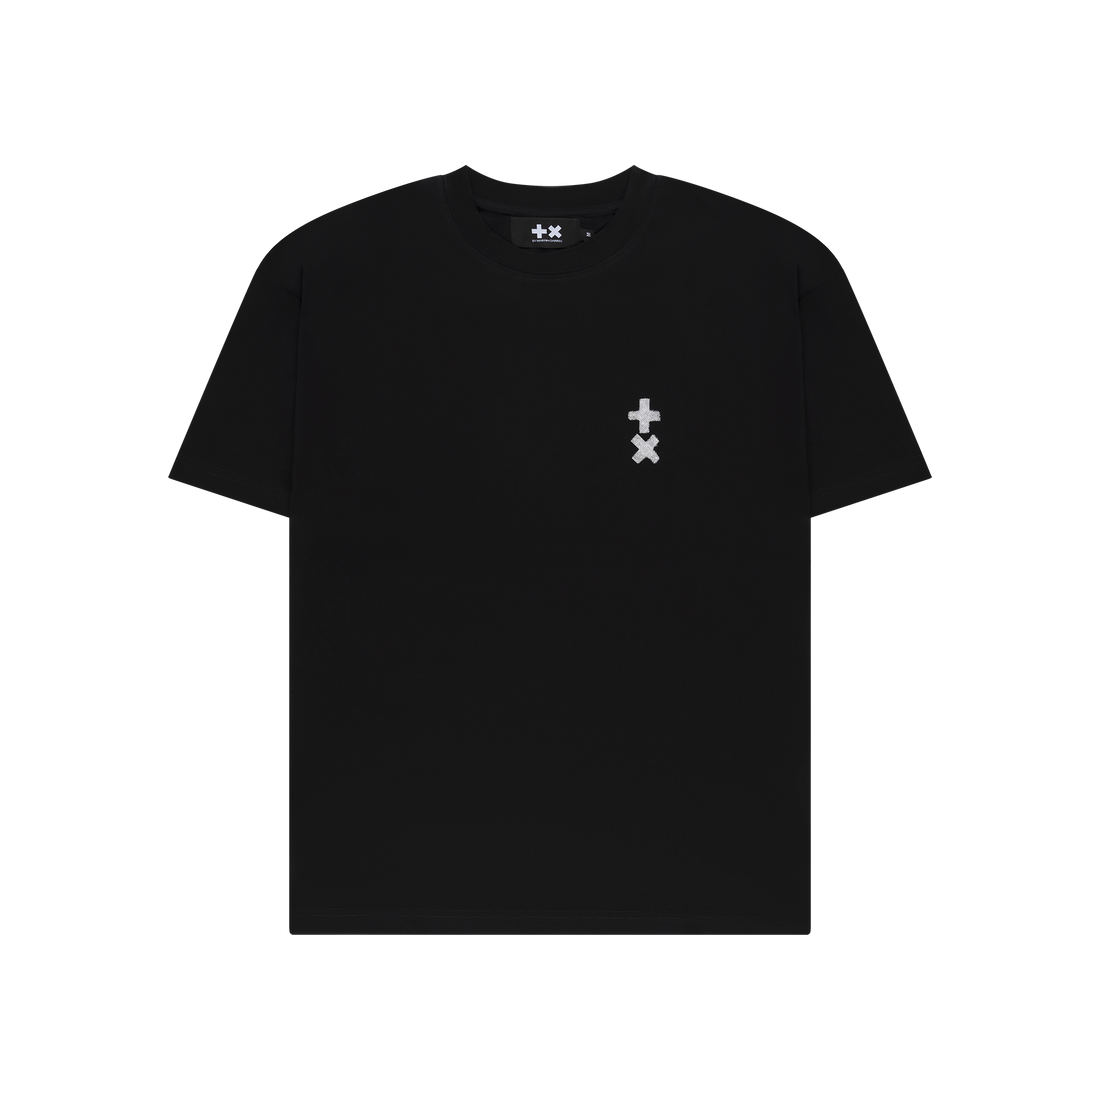 +x Black Silver T-Shirt